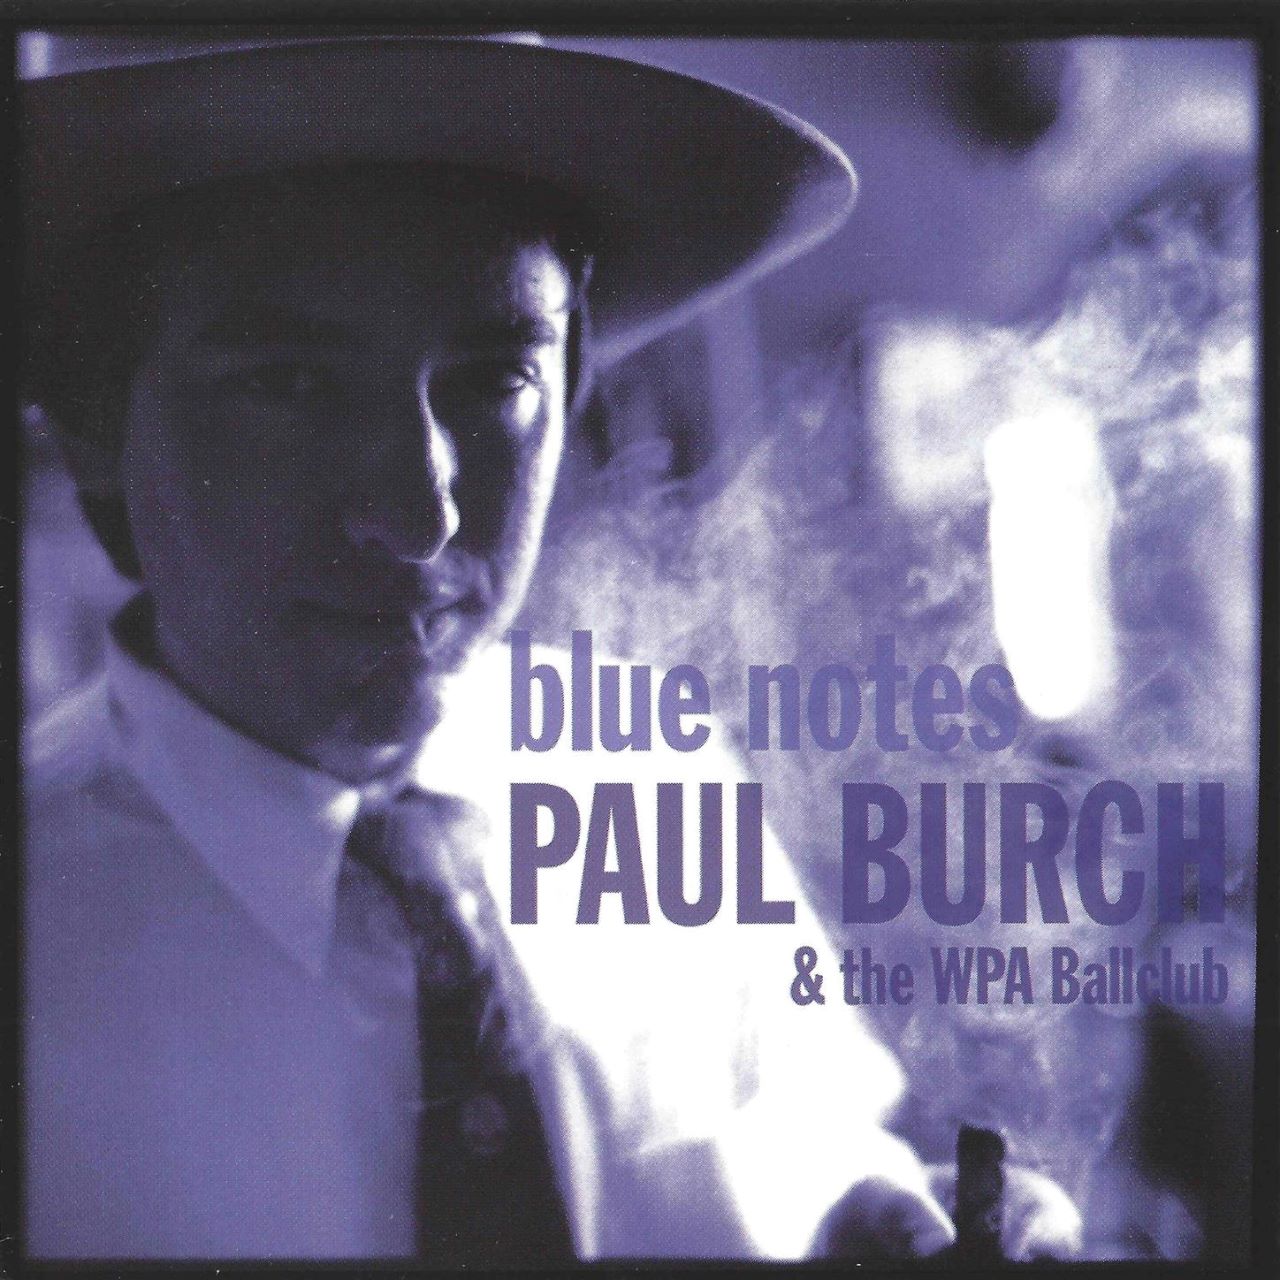 Paul Burch & The WPA Ballclub - Blue Notes cover album